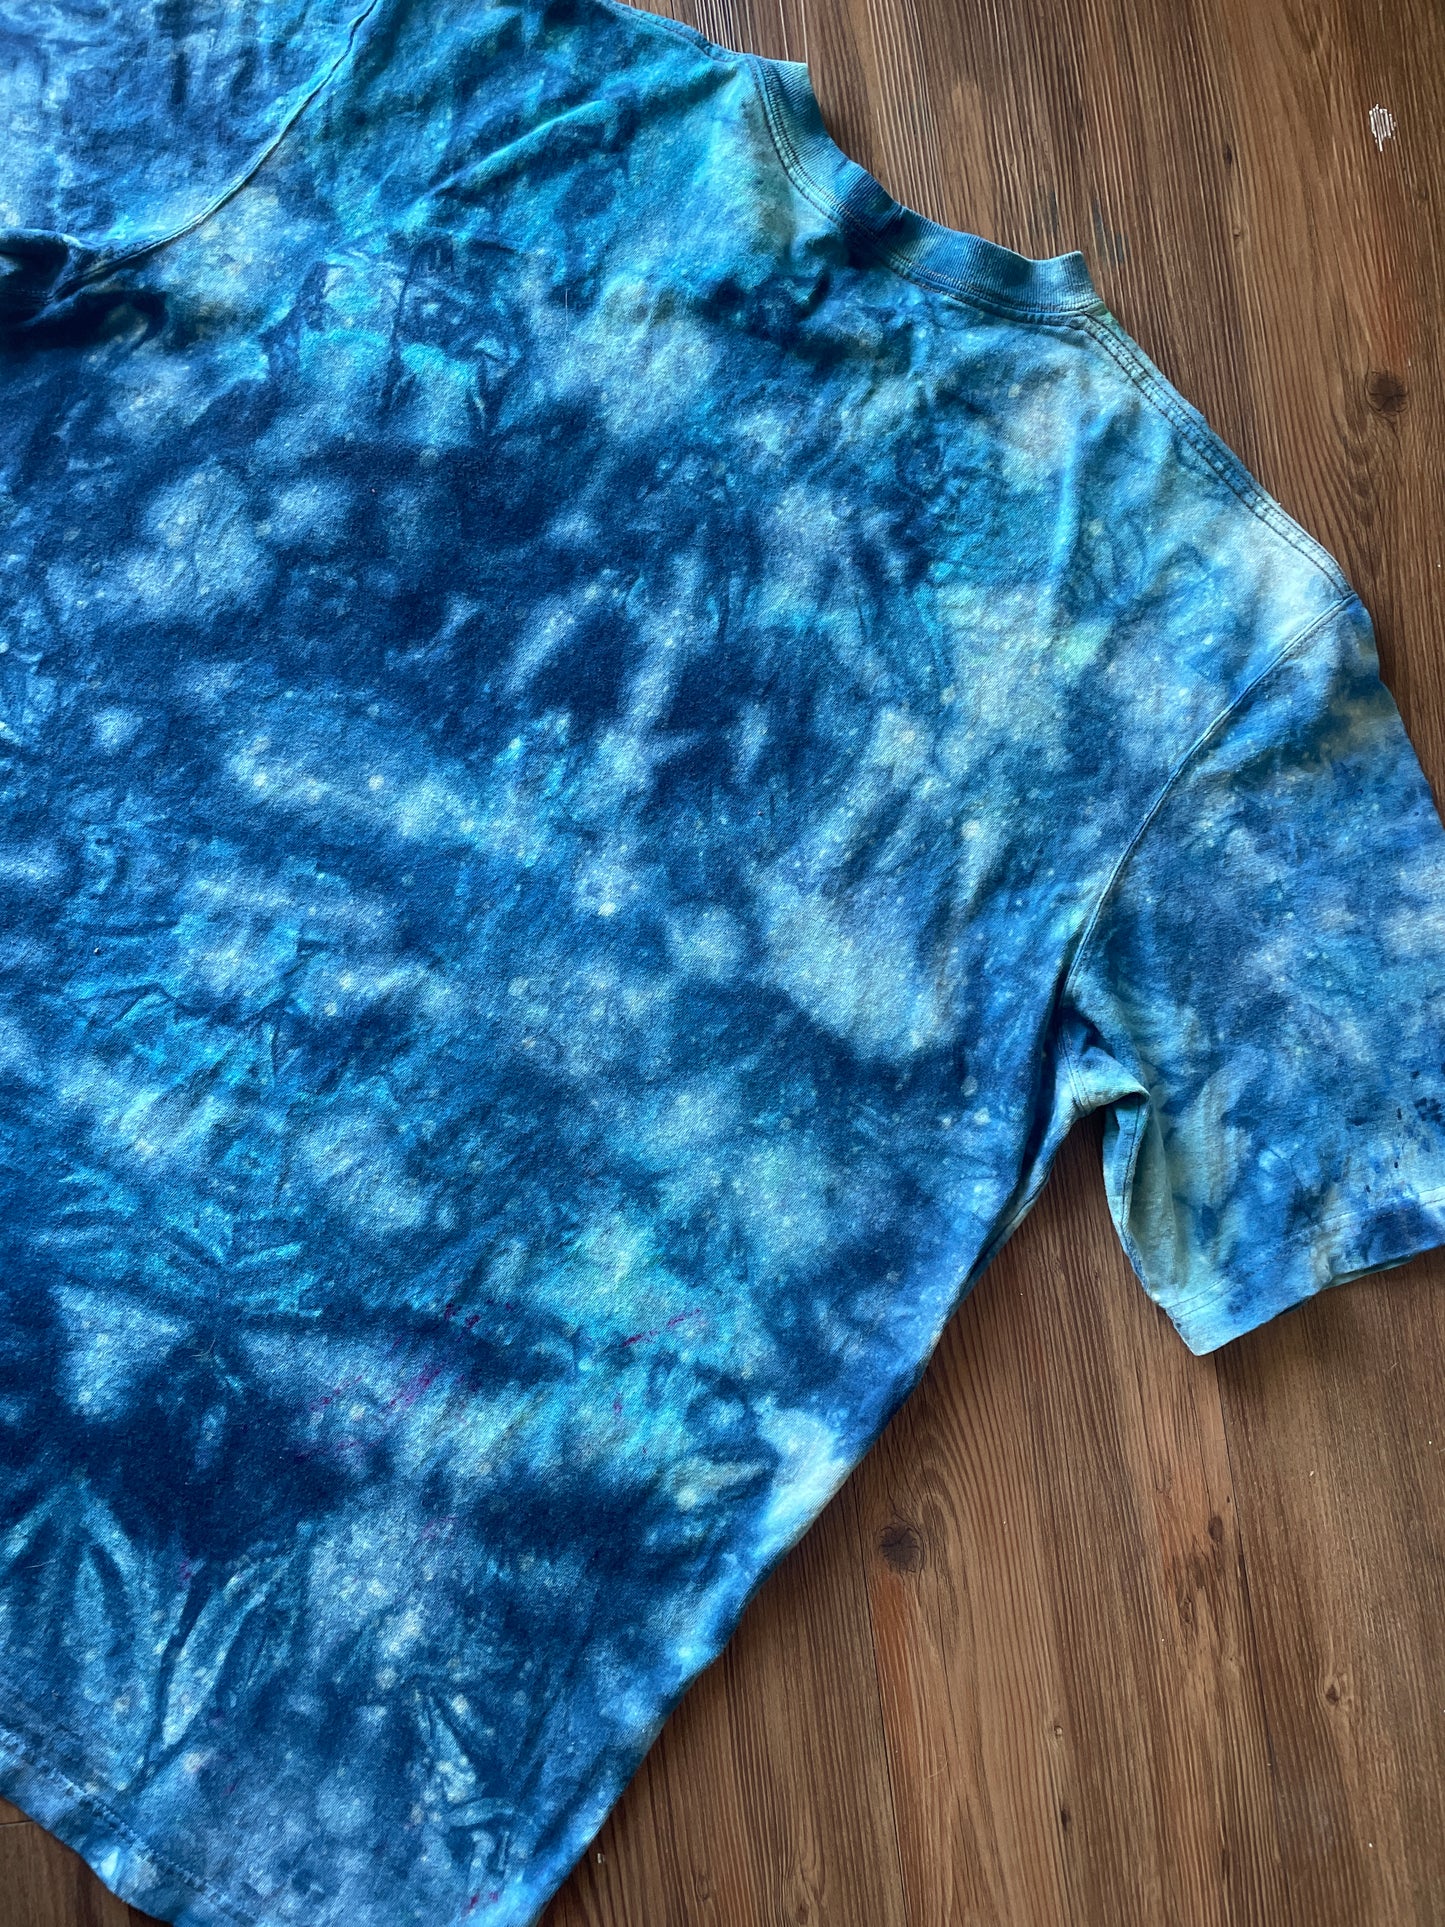 2XL Men’s Carhartt Galaxy Dyed Handmade Tie Dye T-Shirt | Shades of Blue Tie Dye Short Sleeve